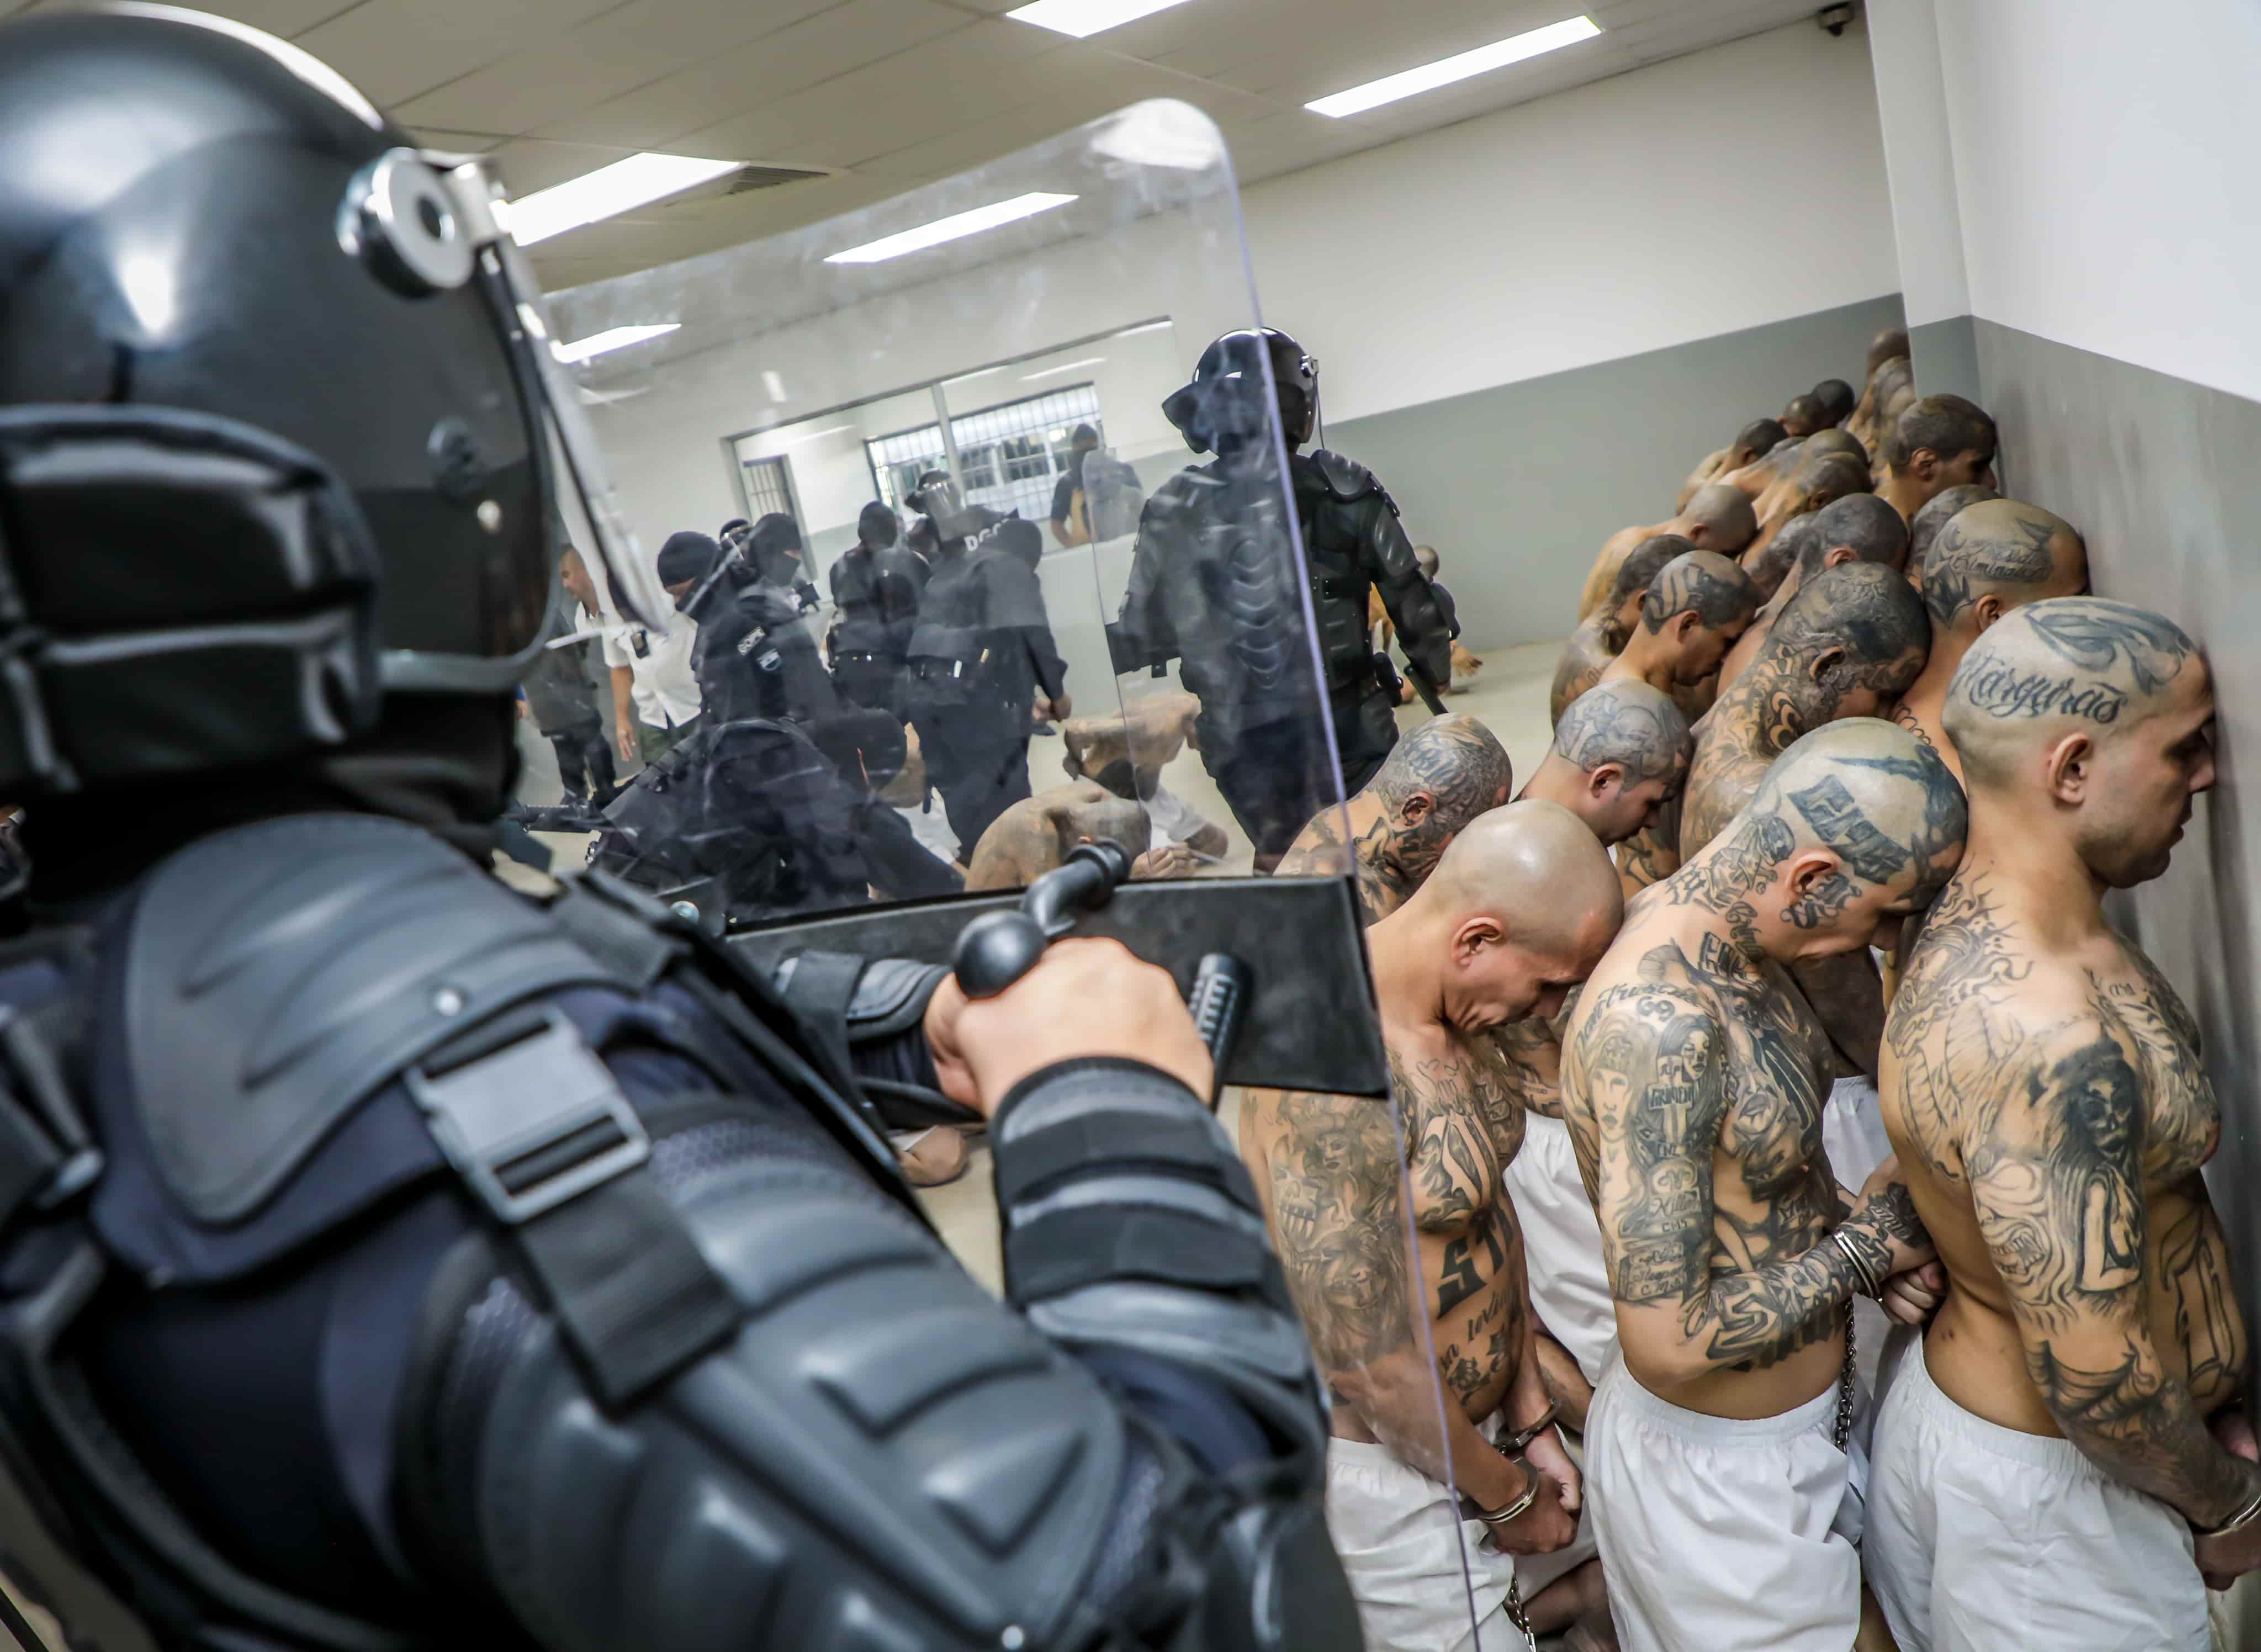 Report: Over 150 Died in Custody During El Salvador’s Gang Crackdown